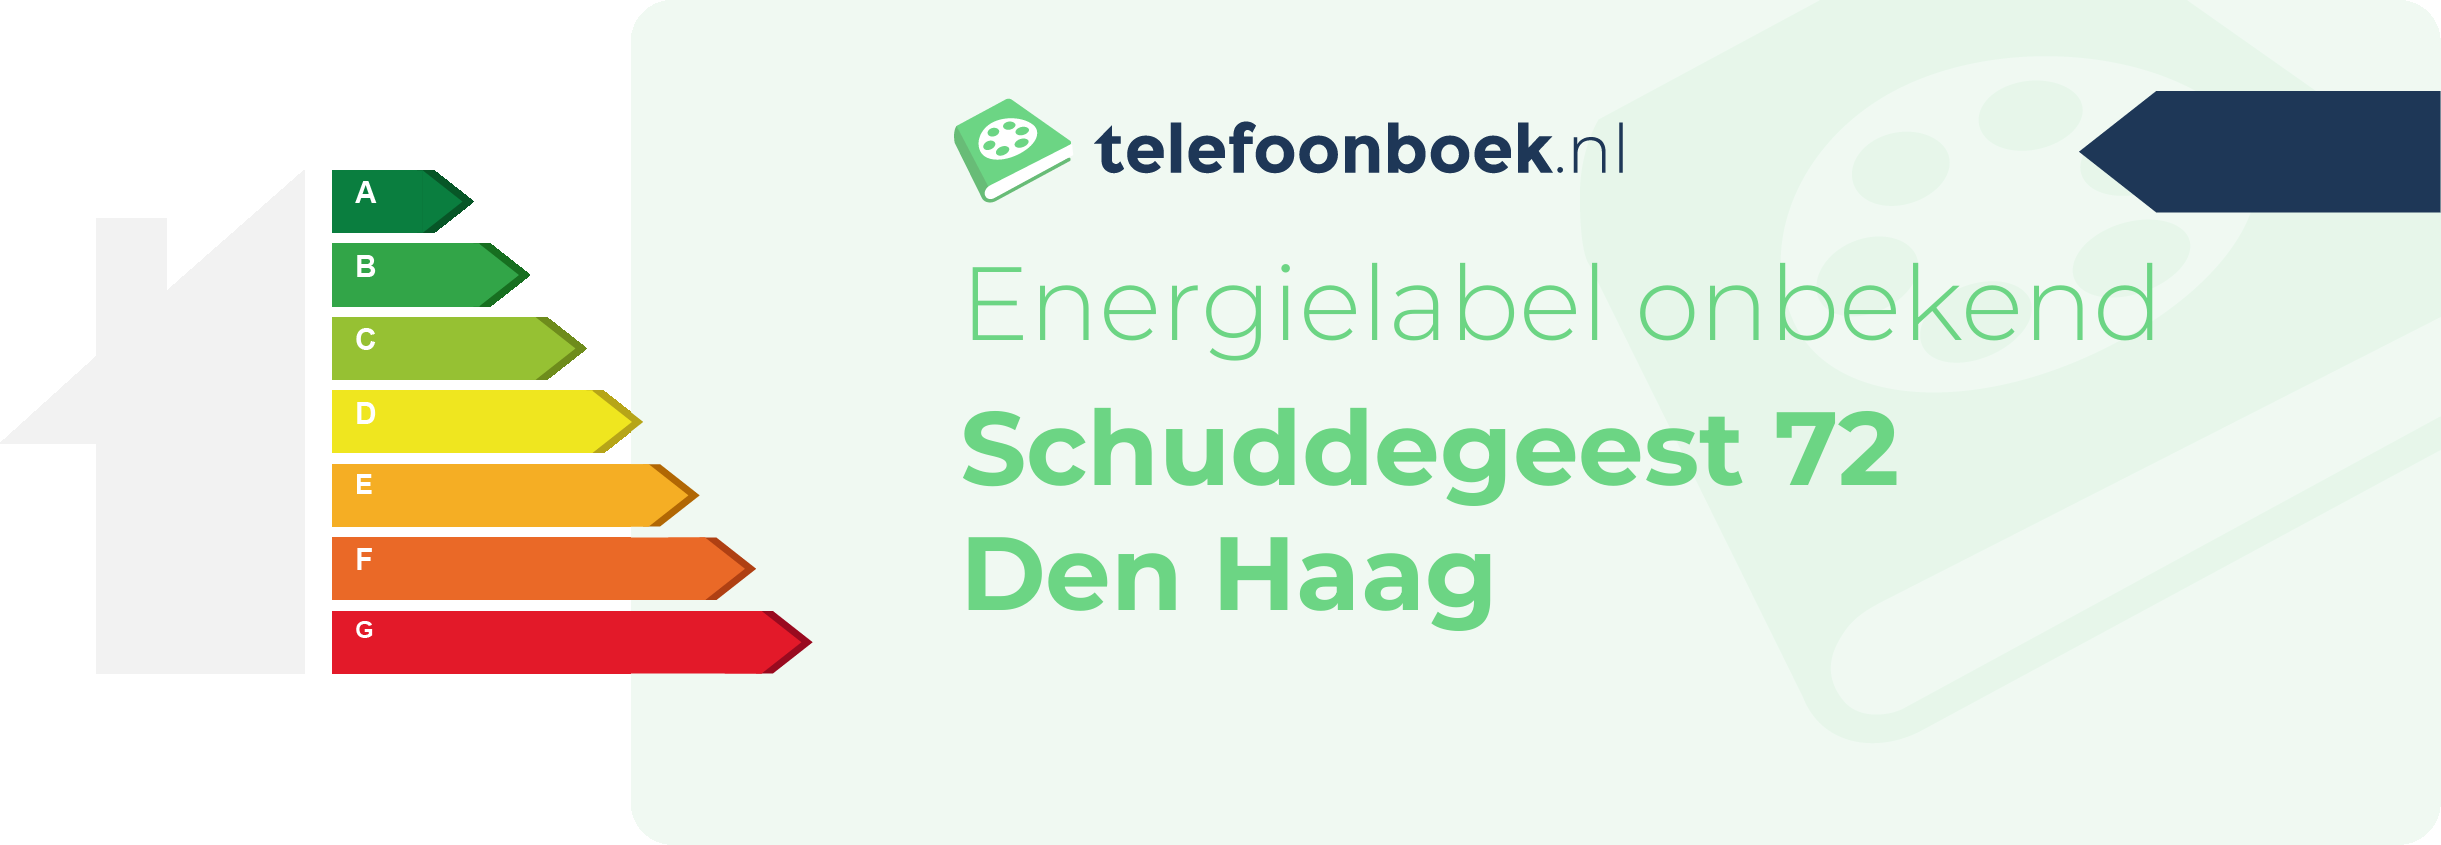 Energielabel Schuddegeest 72 Den Haag